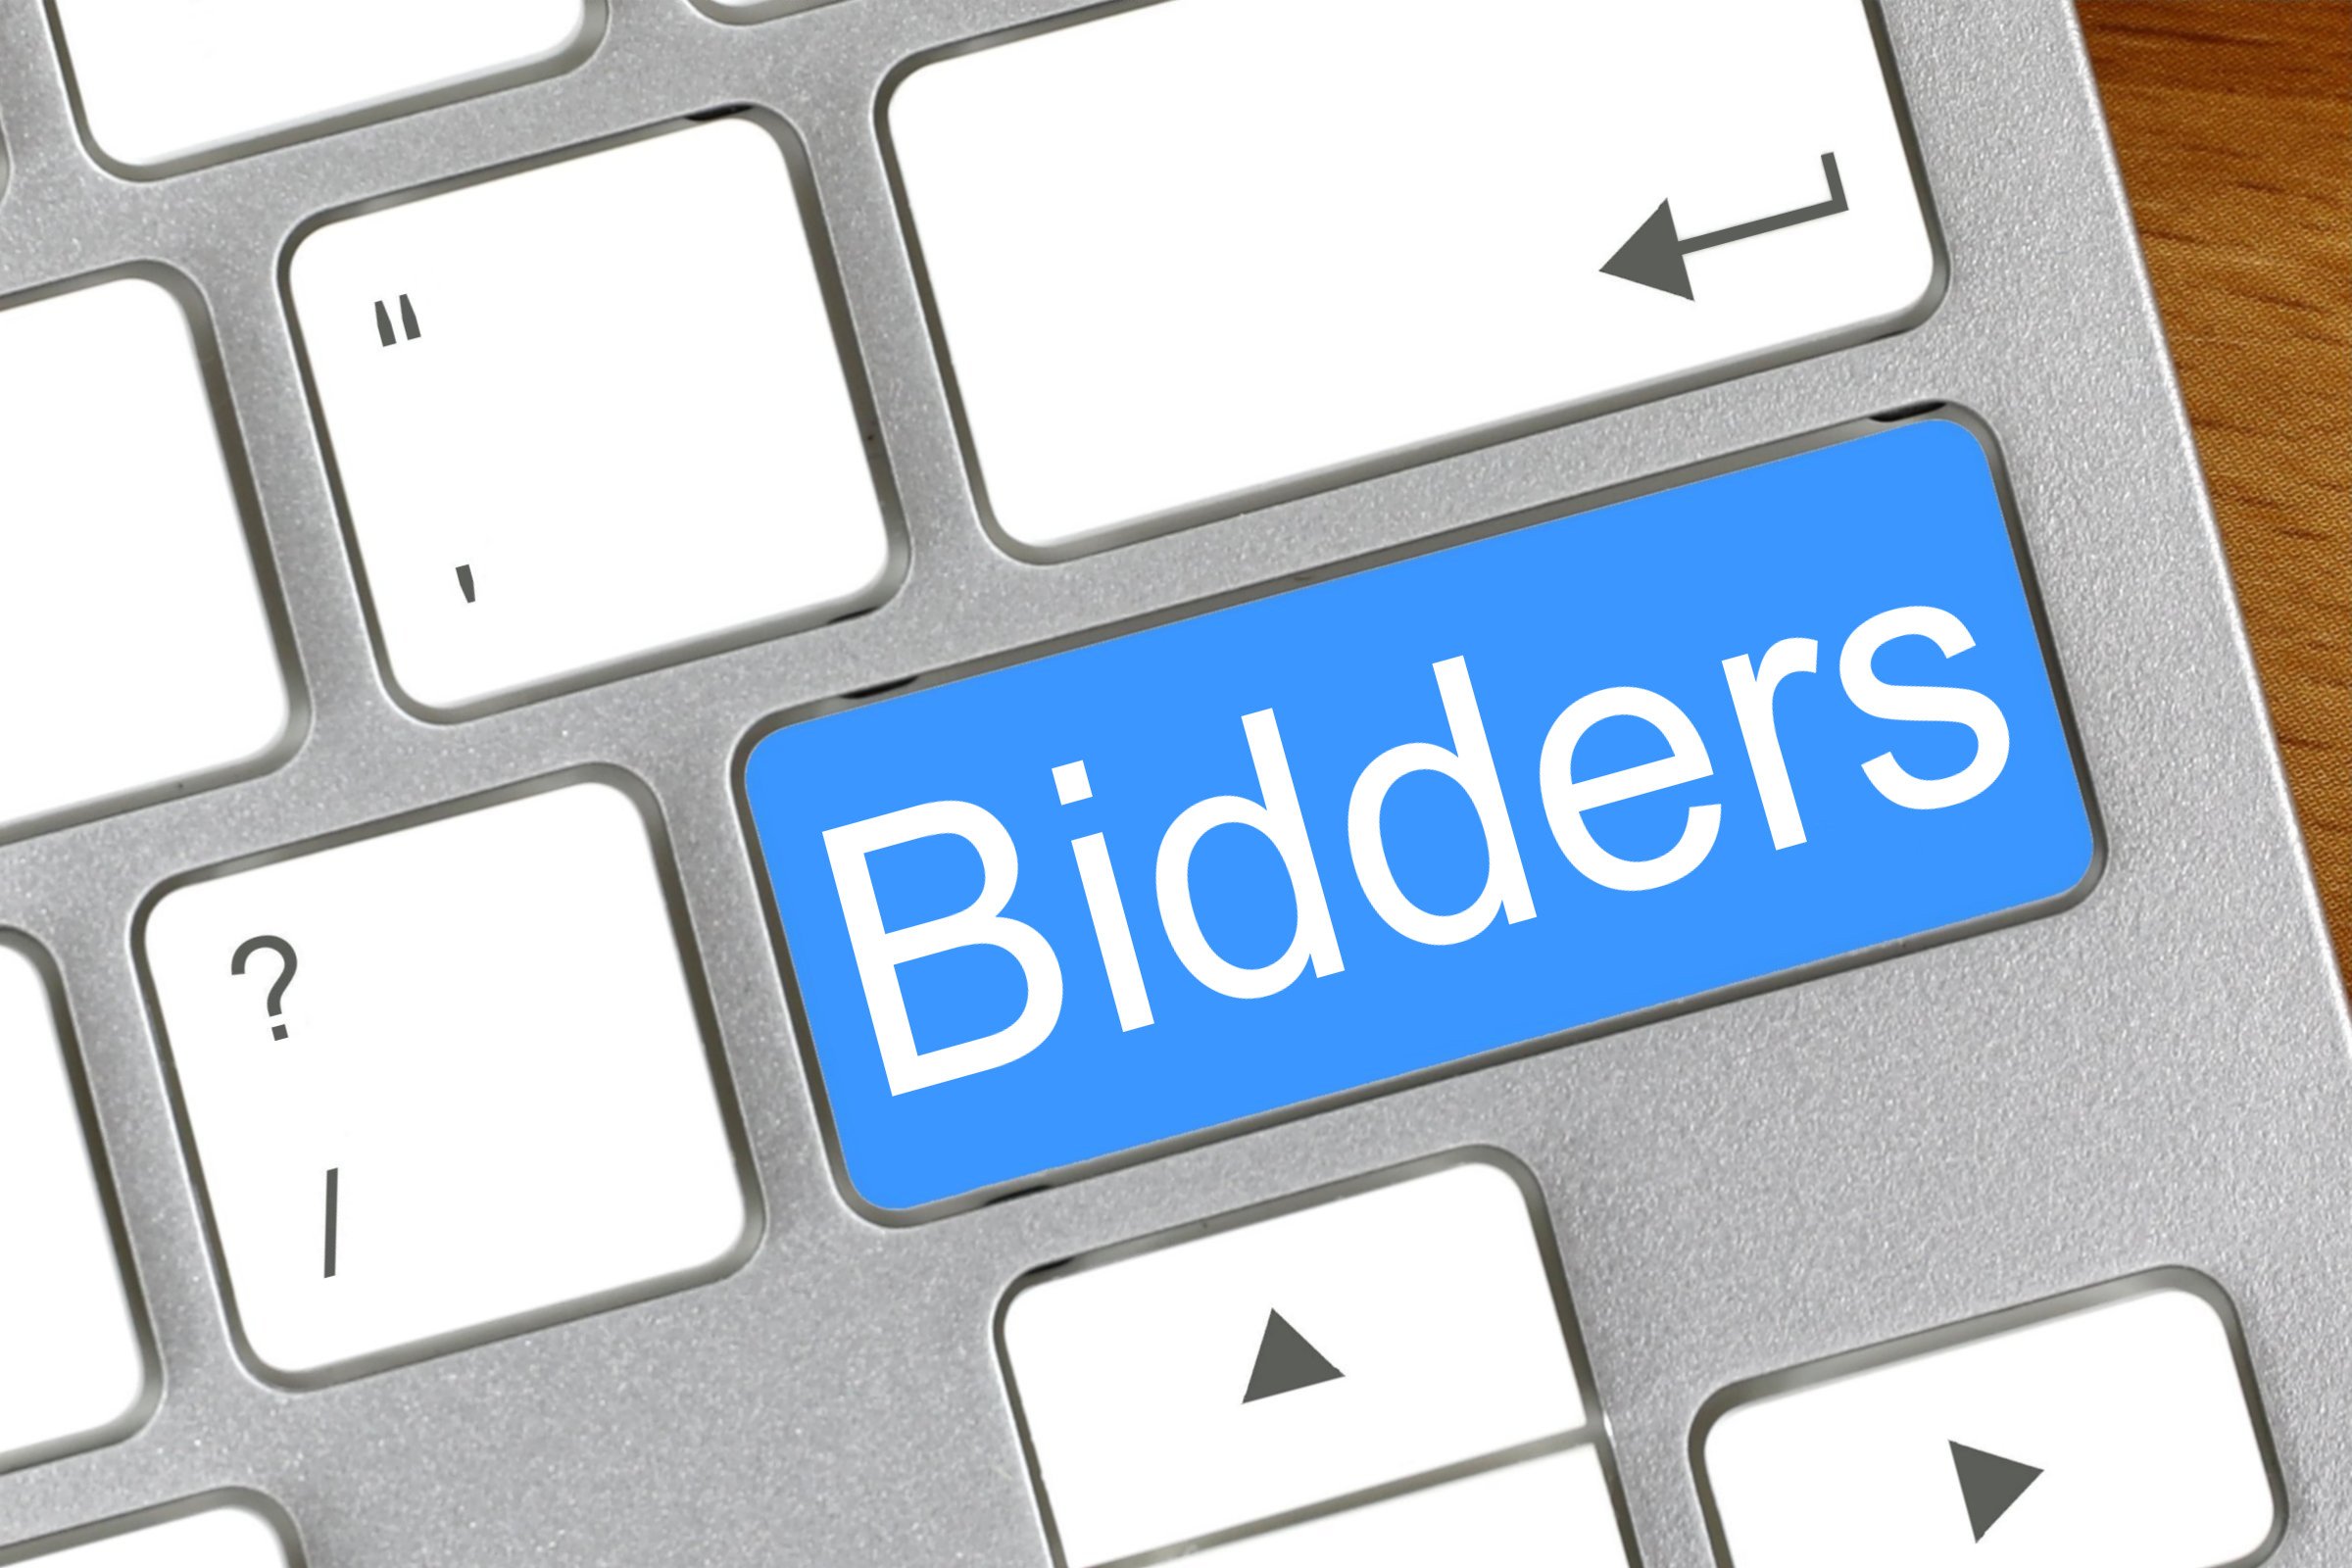 bidders